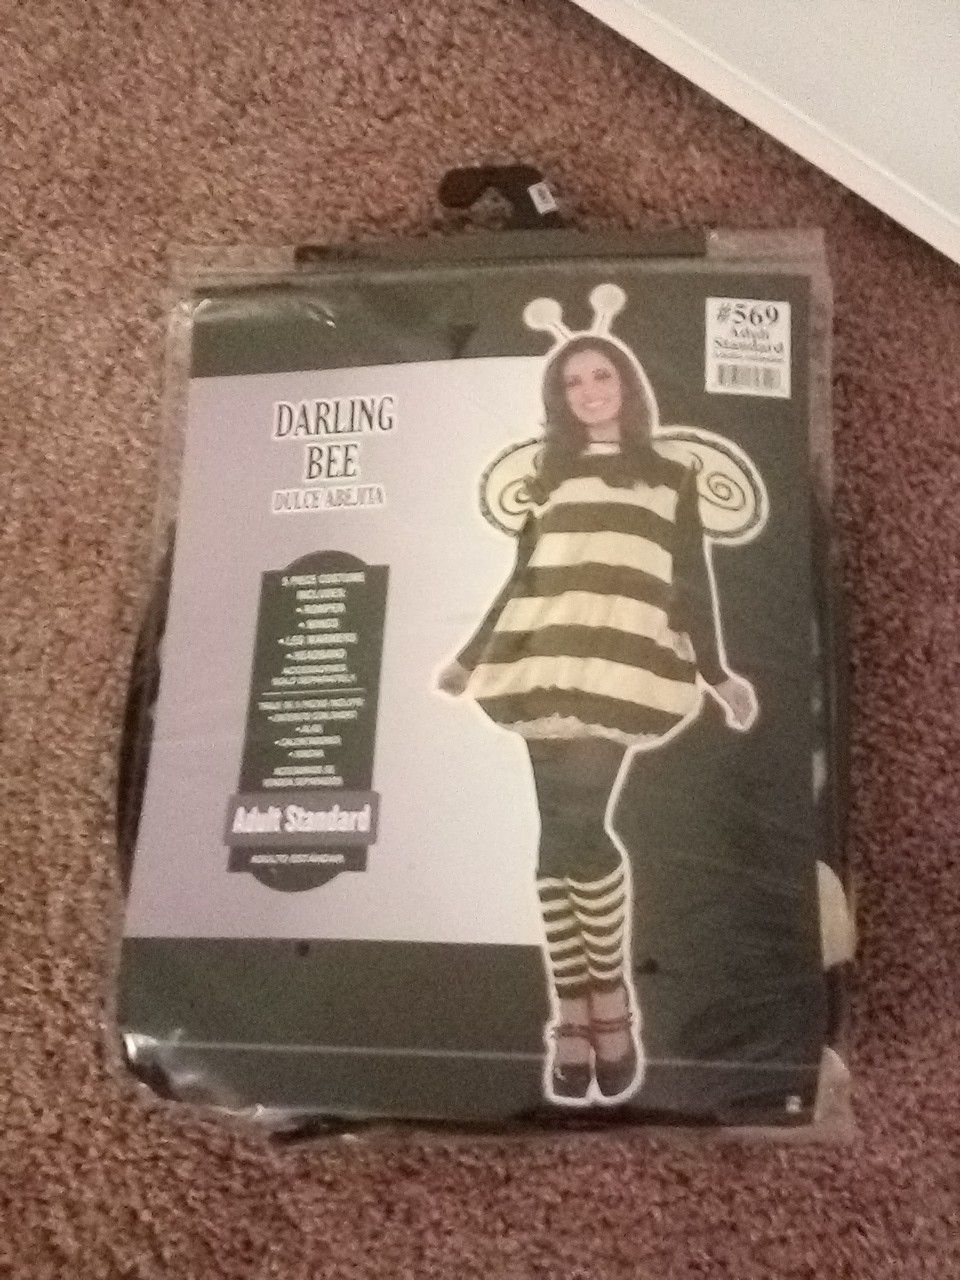 Bee costume ( darling bee)